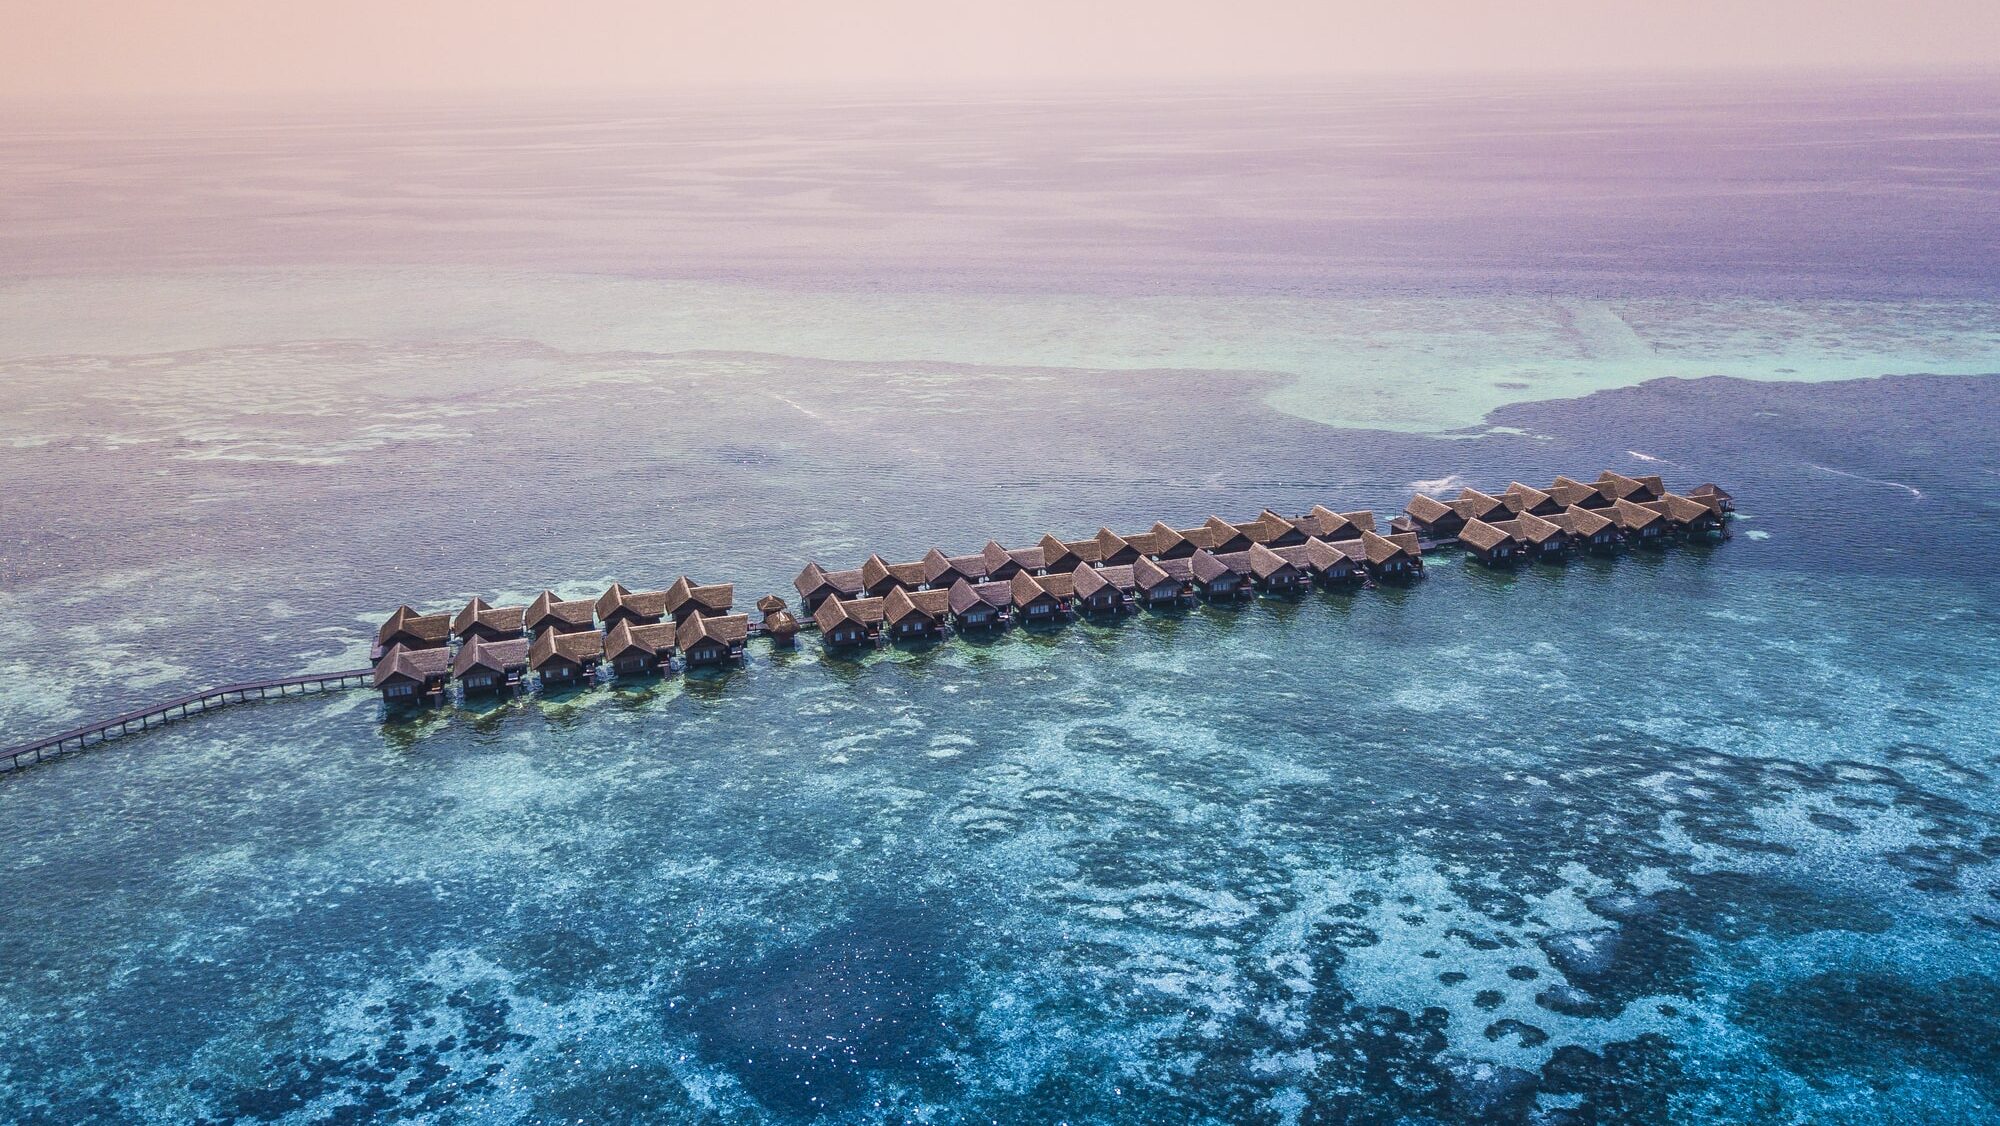 Maldives resort island